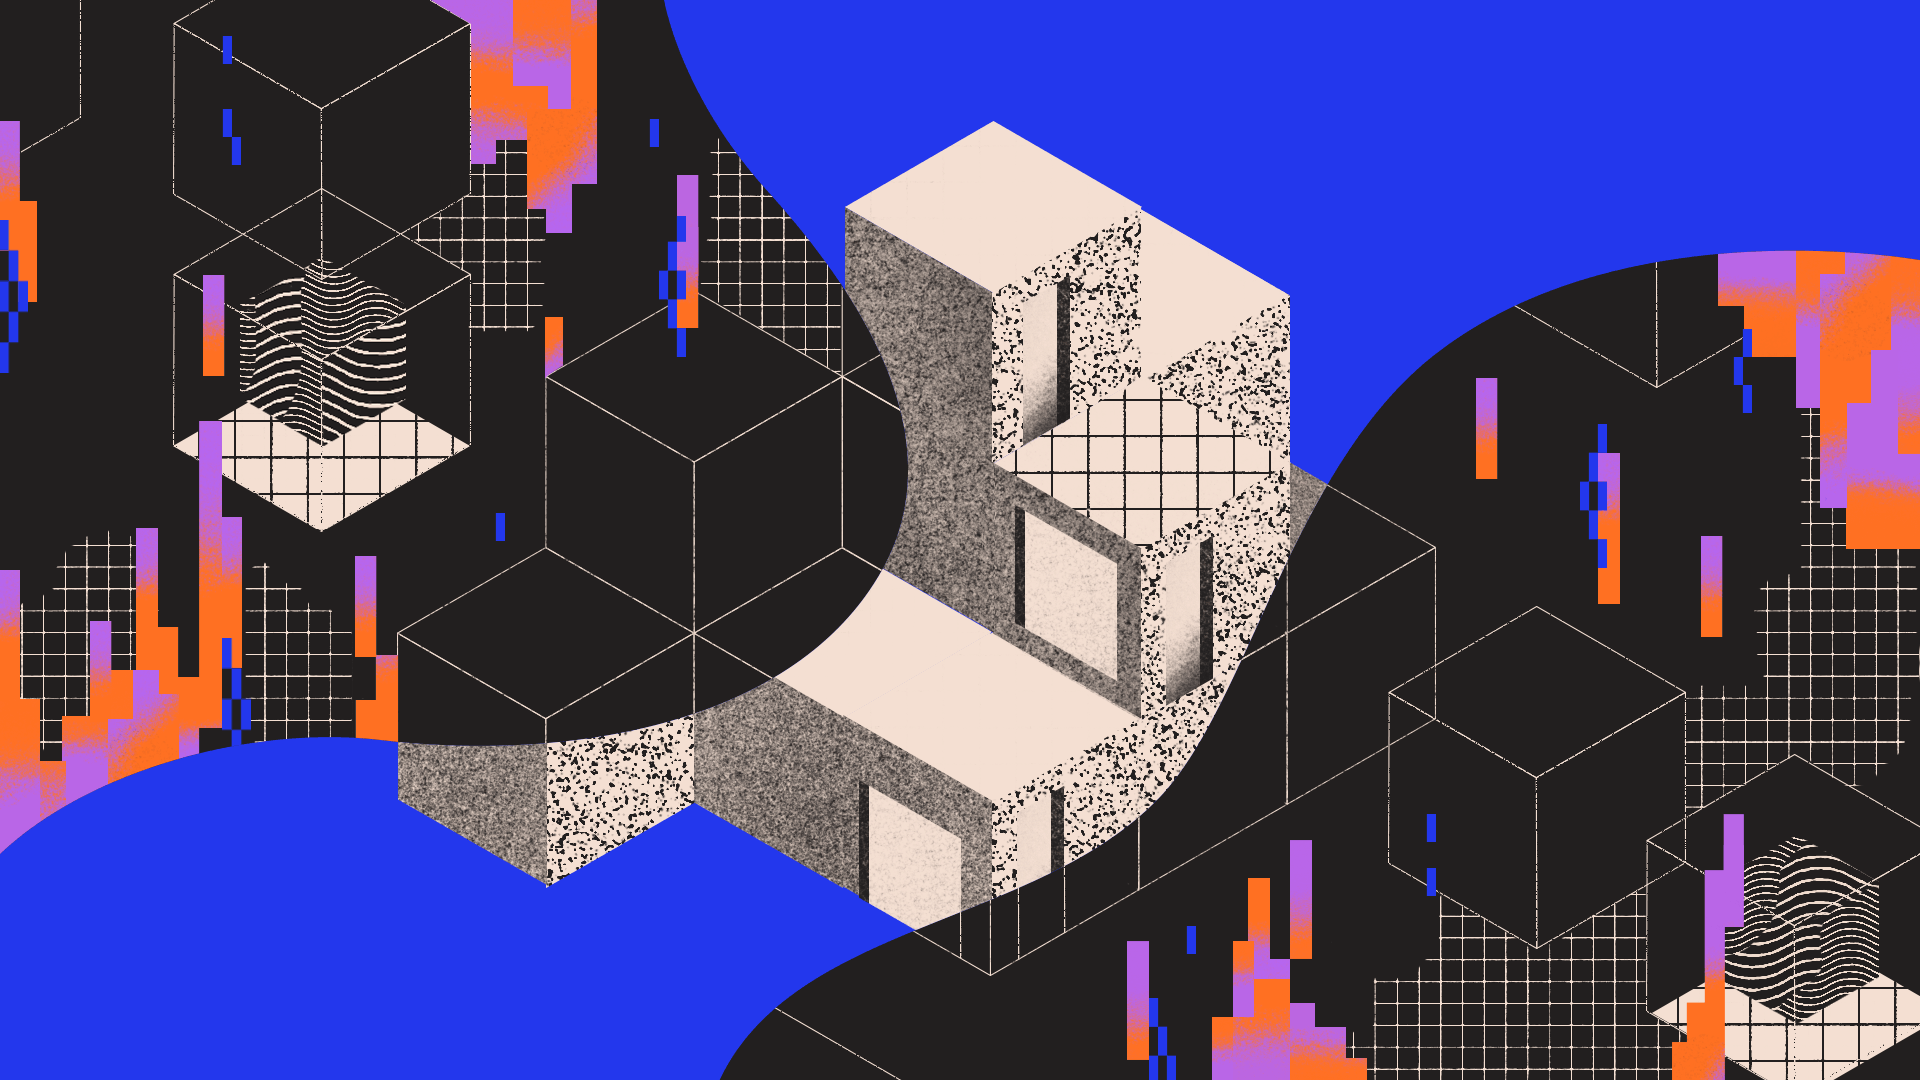 Geometric shapes and pixelated blocks